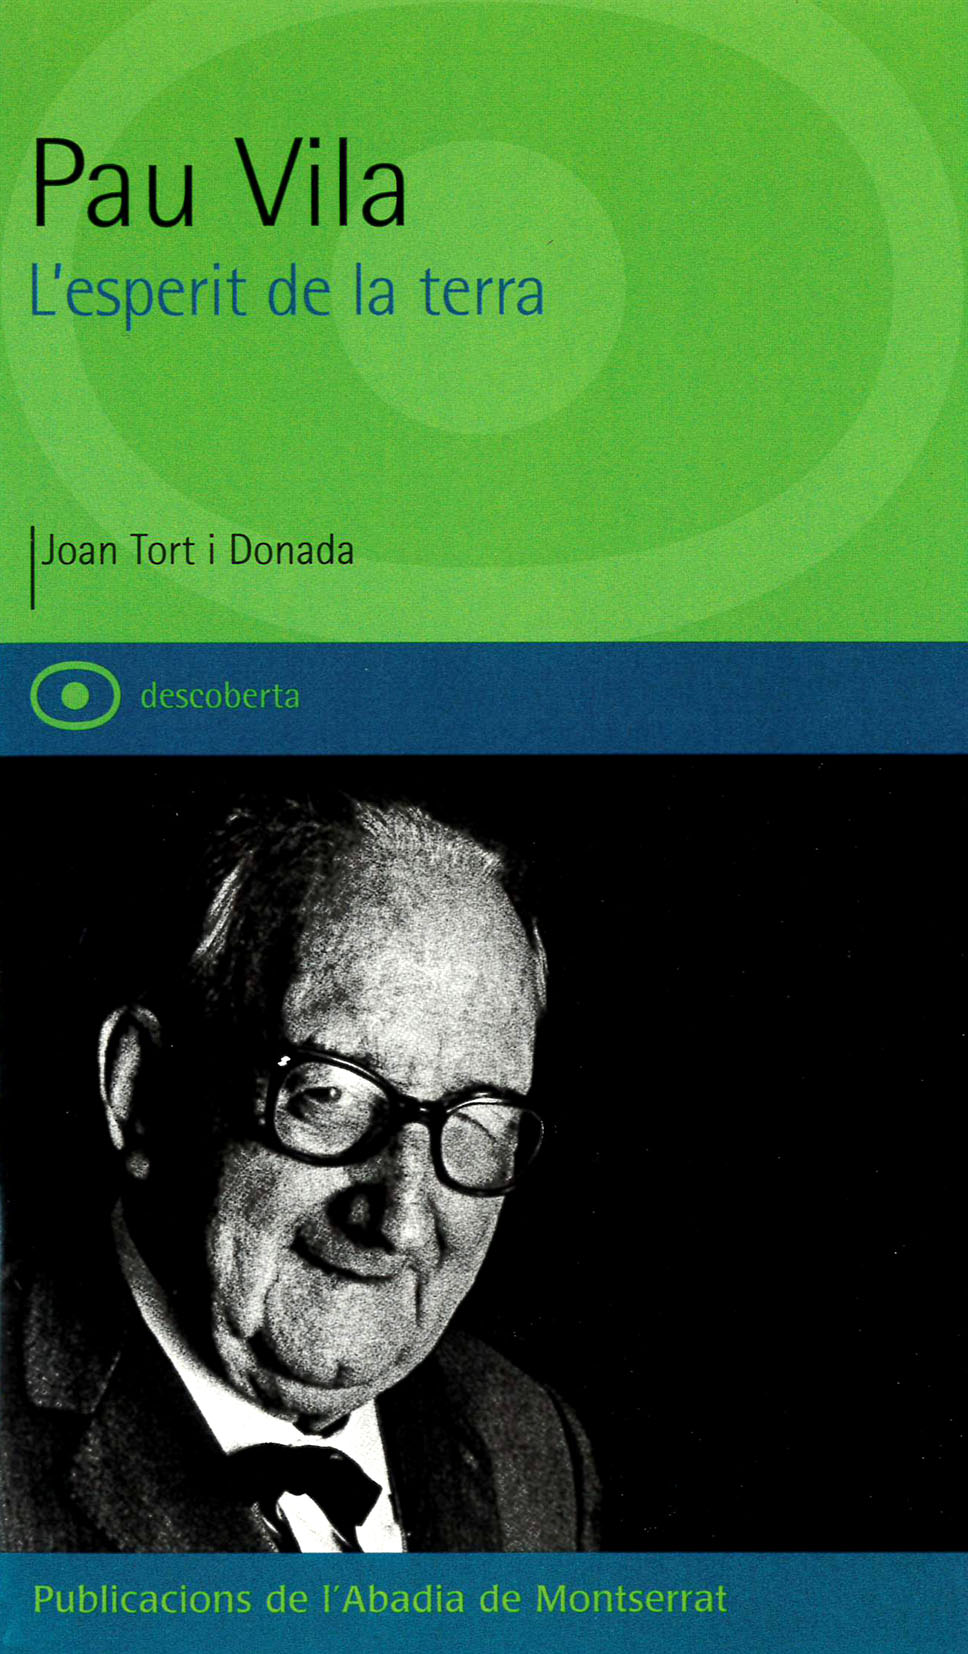 Joan Tort i Donada